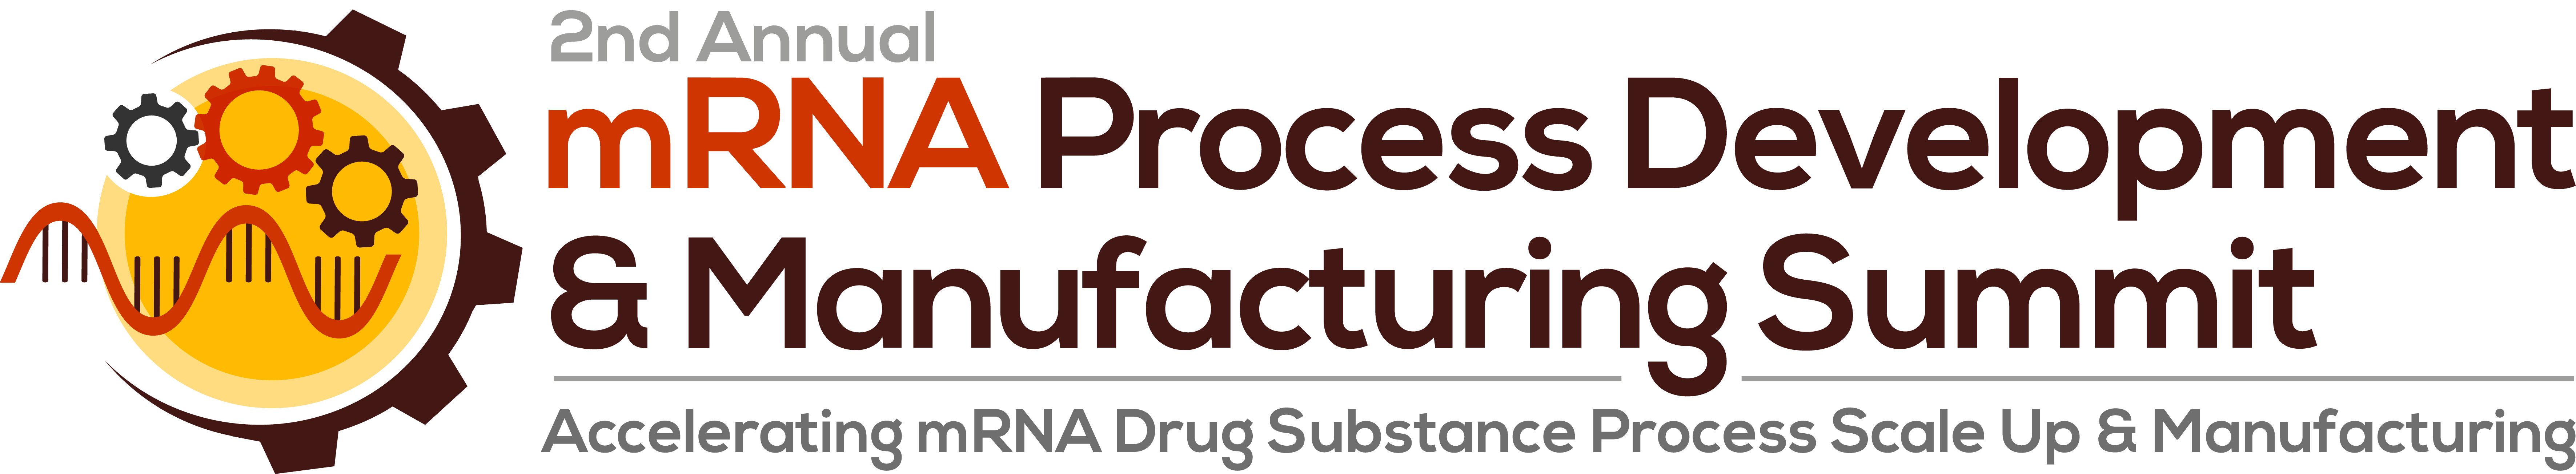 HW230316 2nd mRNA Process Development & Manufacturing Summit logo